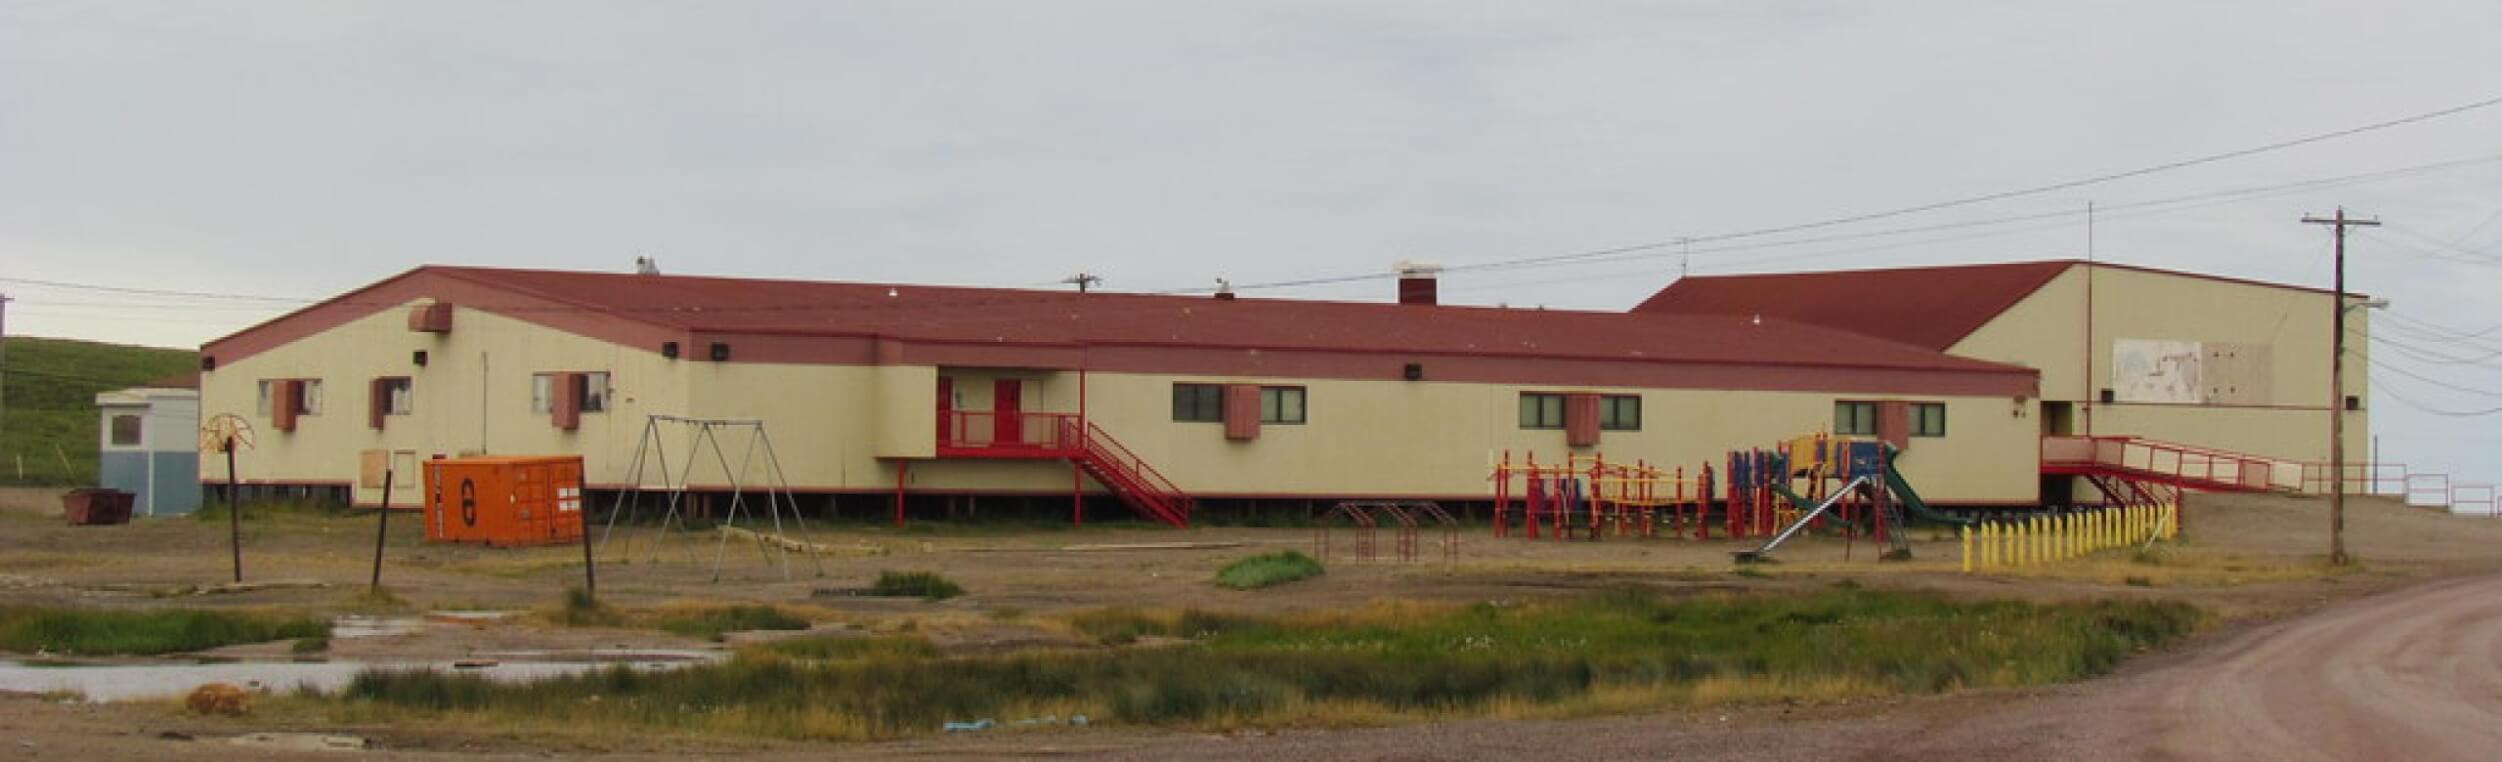 Mangilaluk School in Tuktoyaktuk, N.W.T.